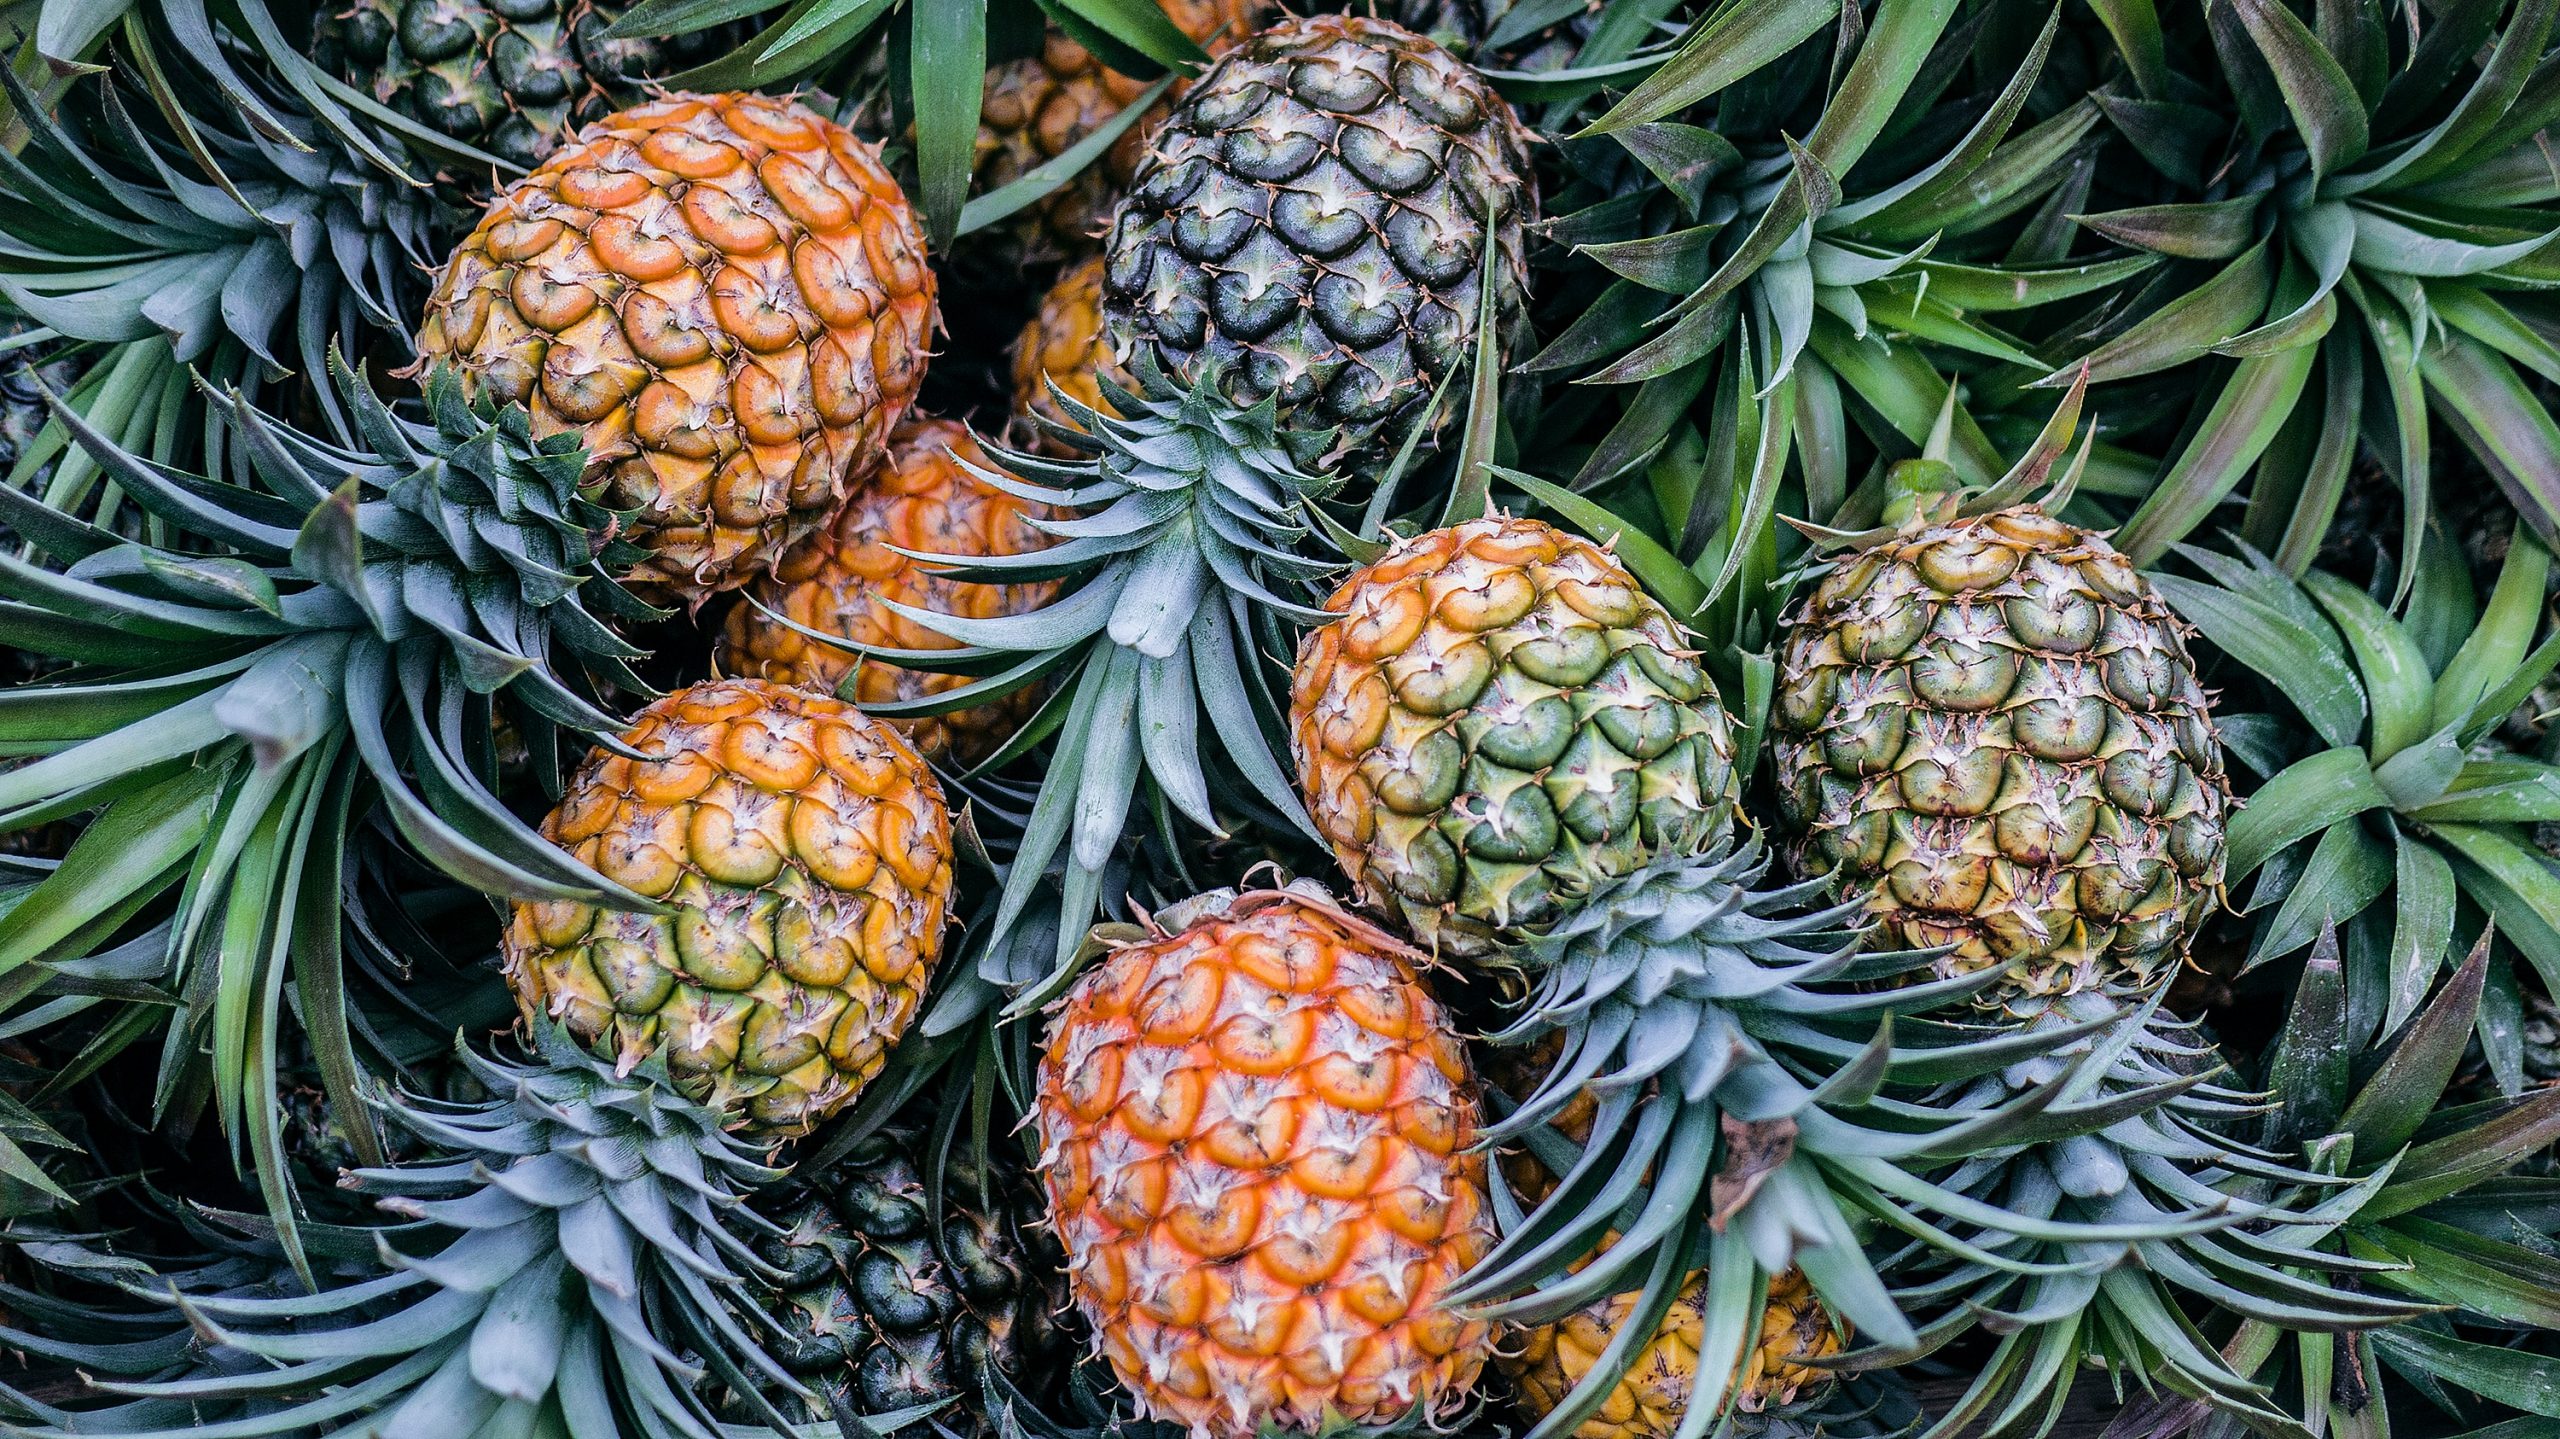 Do Pineapples Grow Underground?